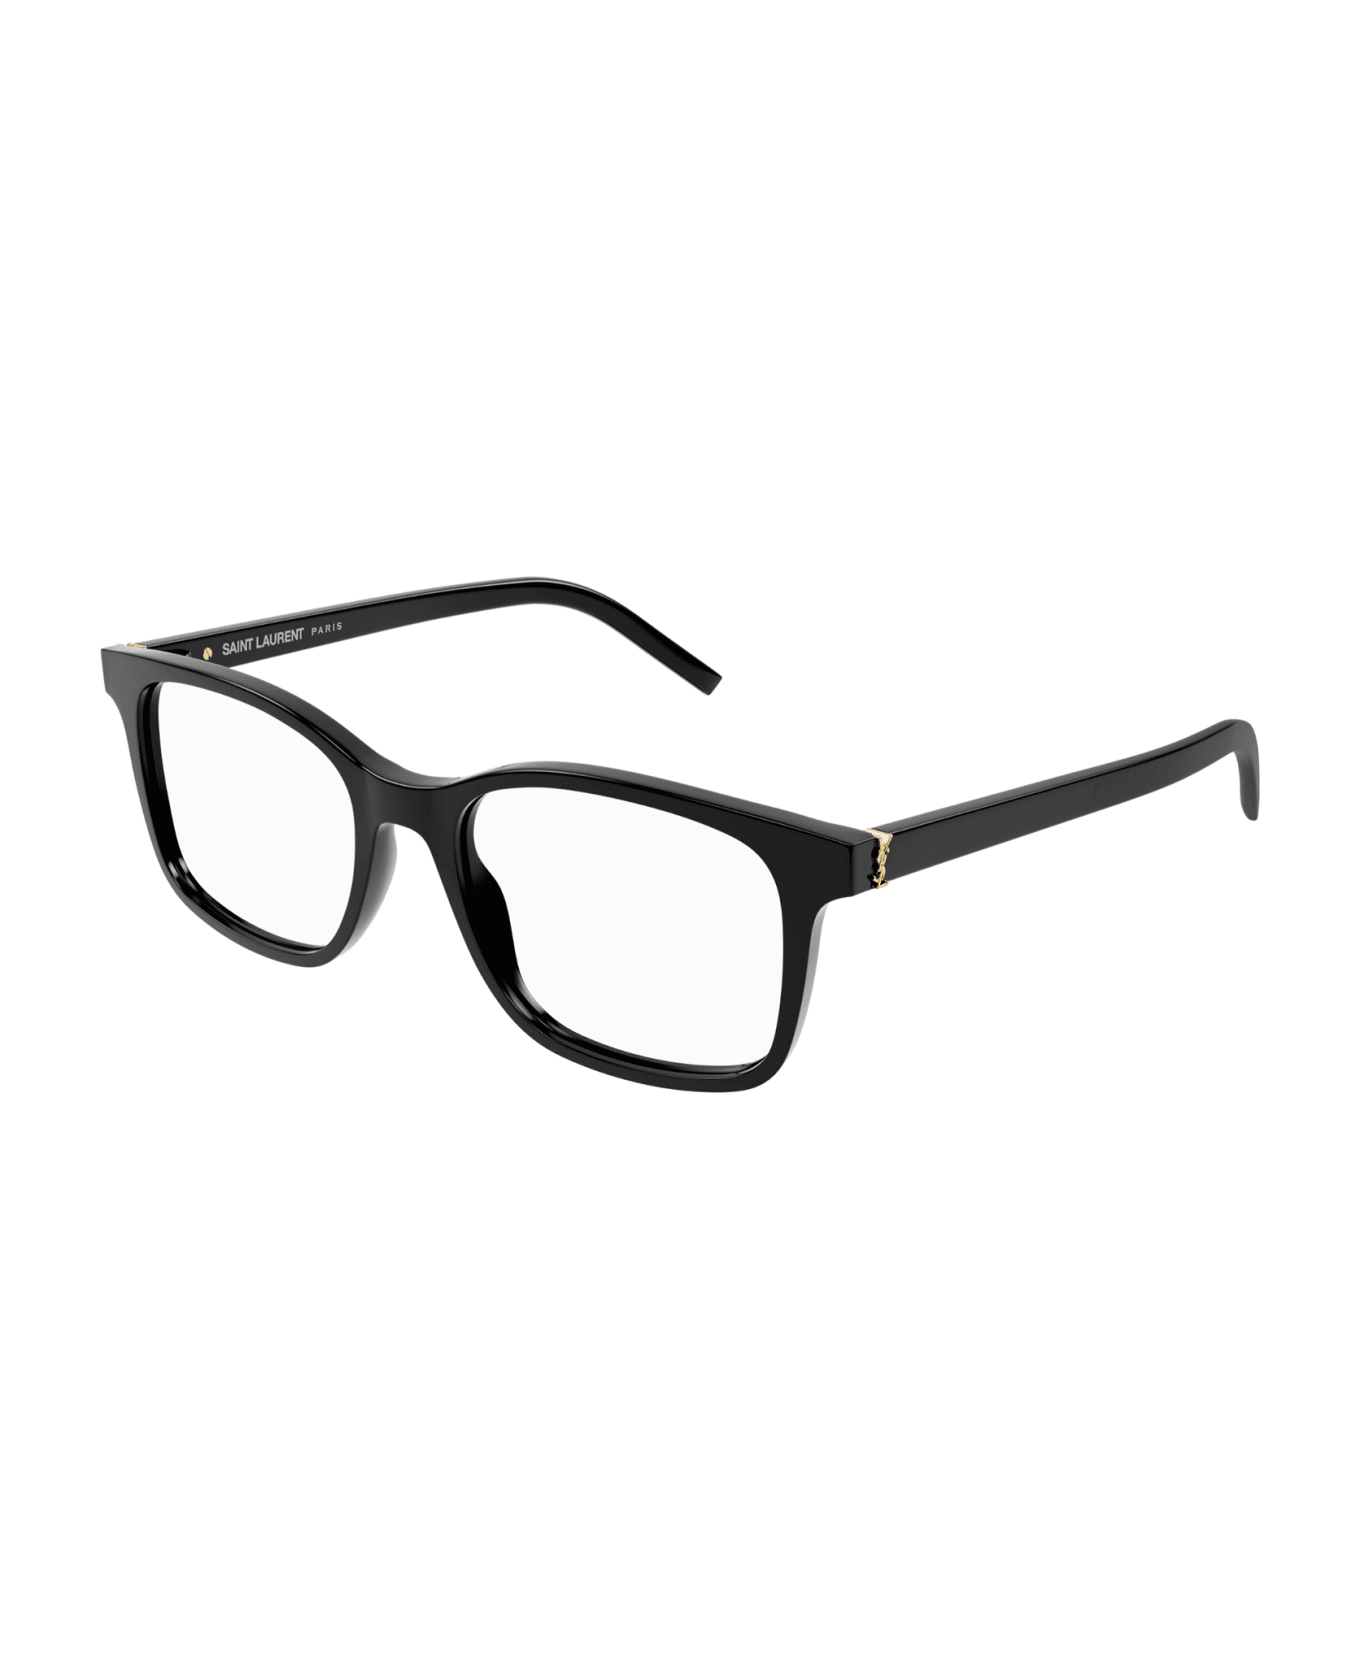 Saint Laurent Eyewear SL M120 Eyewear - Black Black Transpare